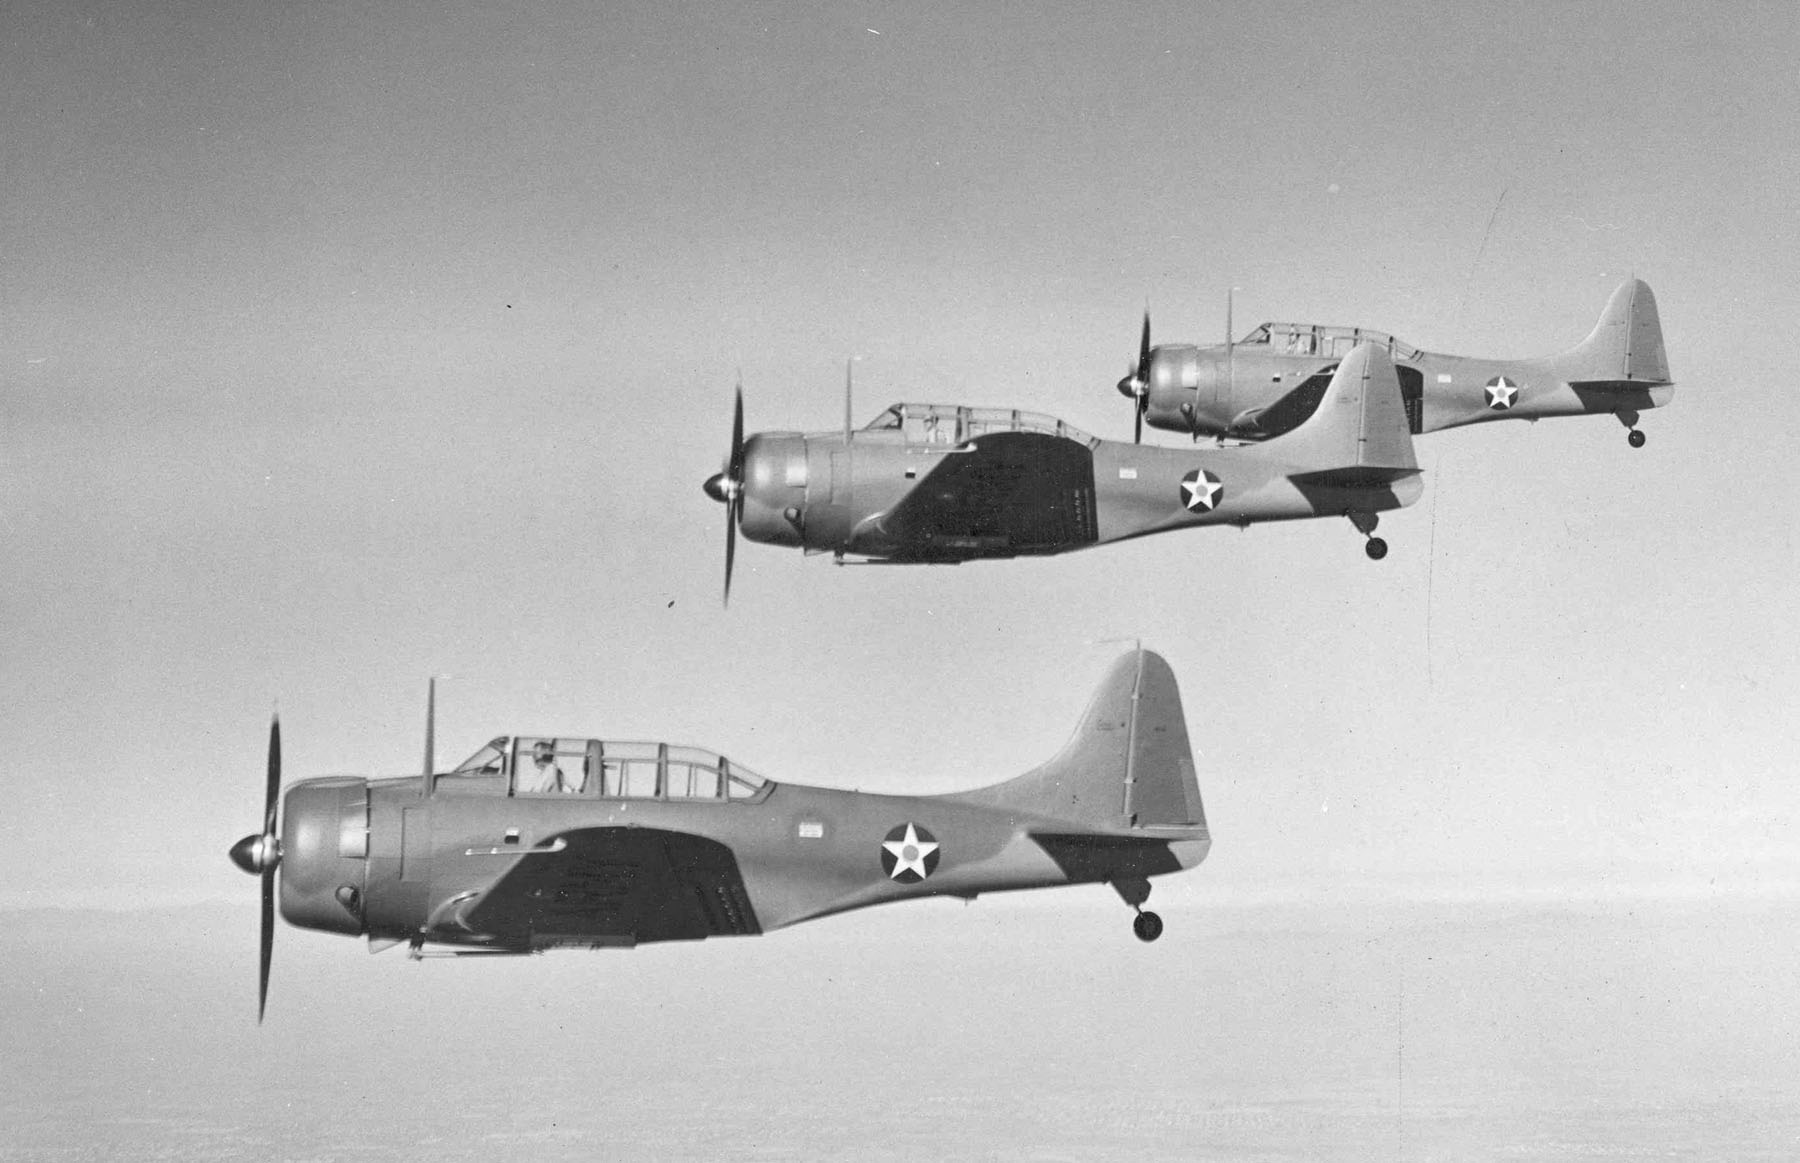 Three Douglas A-24 Banshee aircraft flying in formation, 1941-42